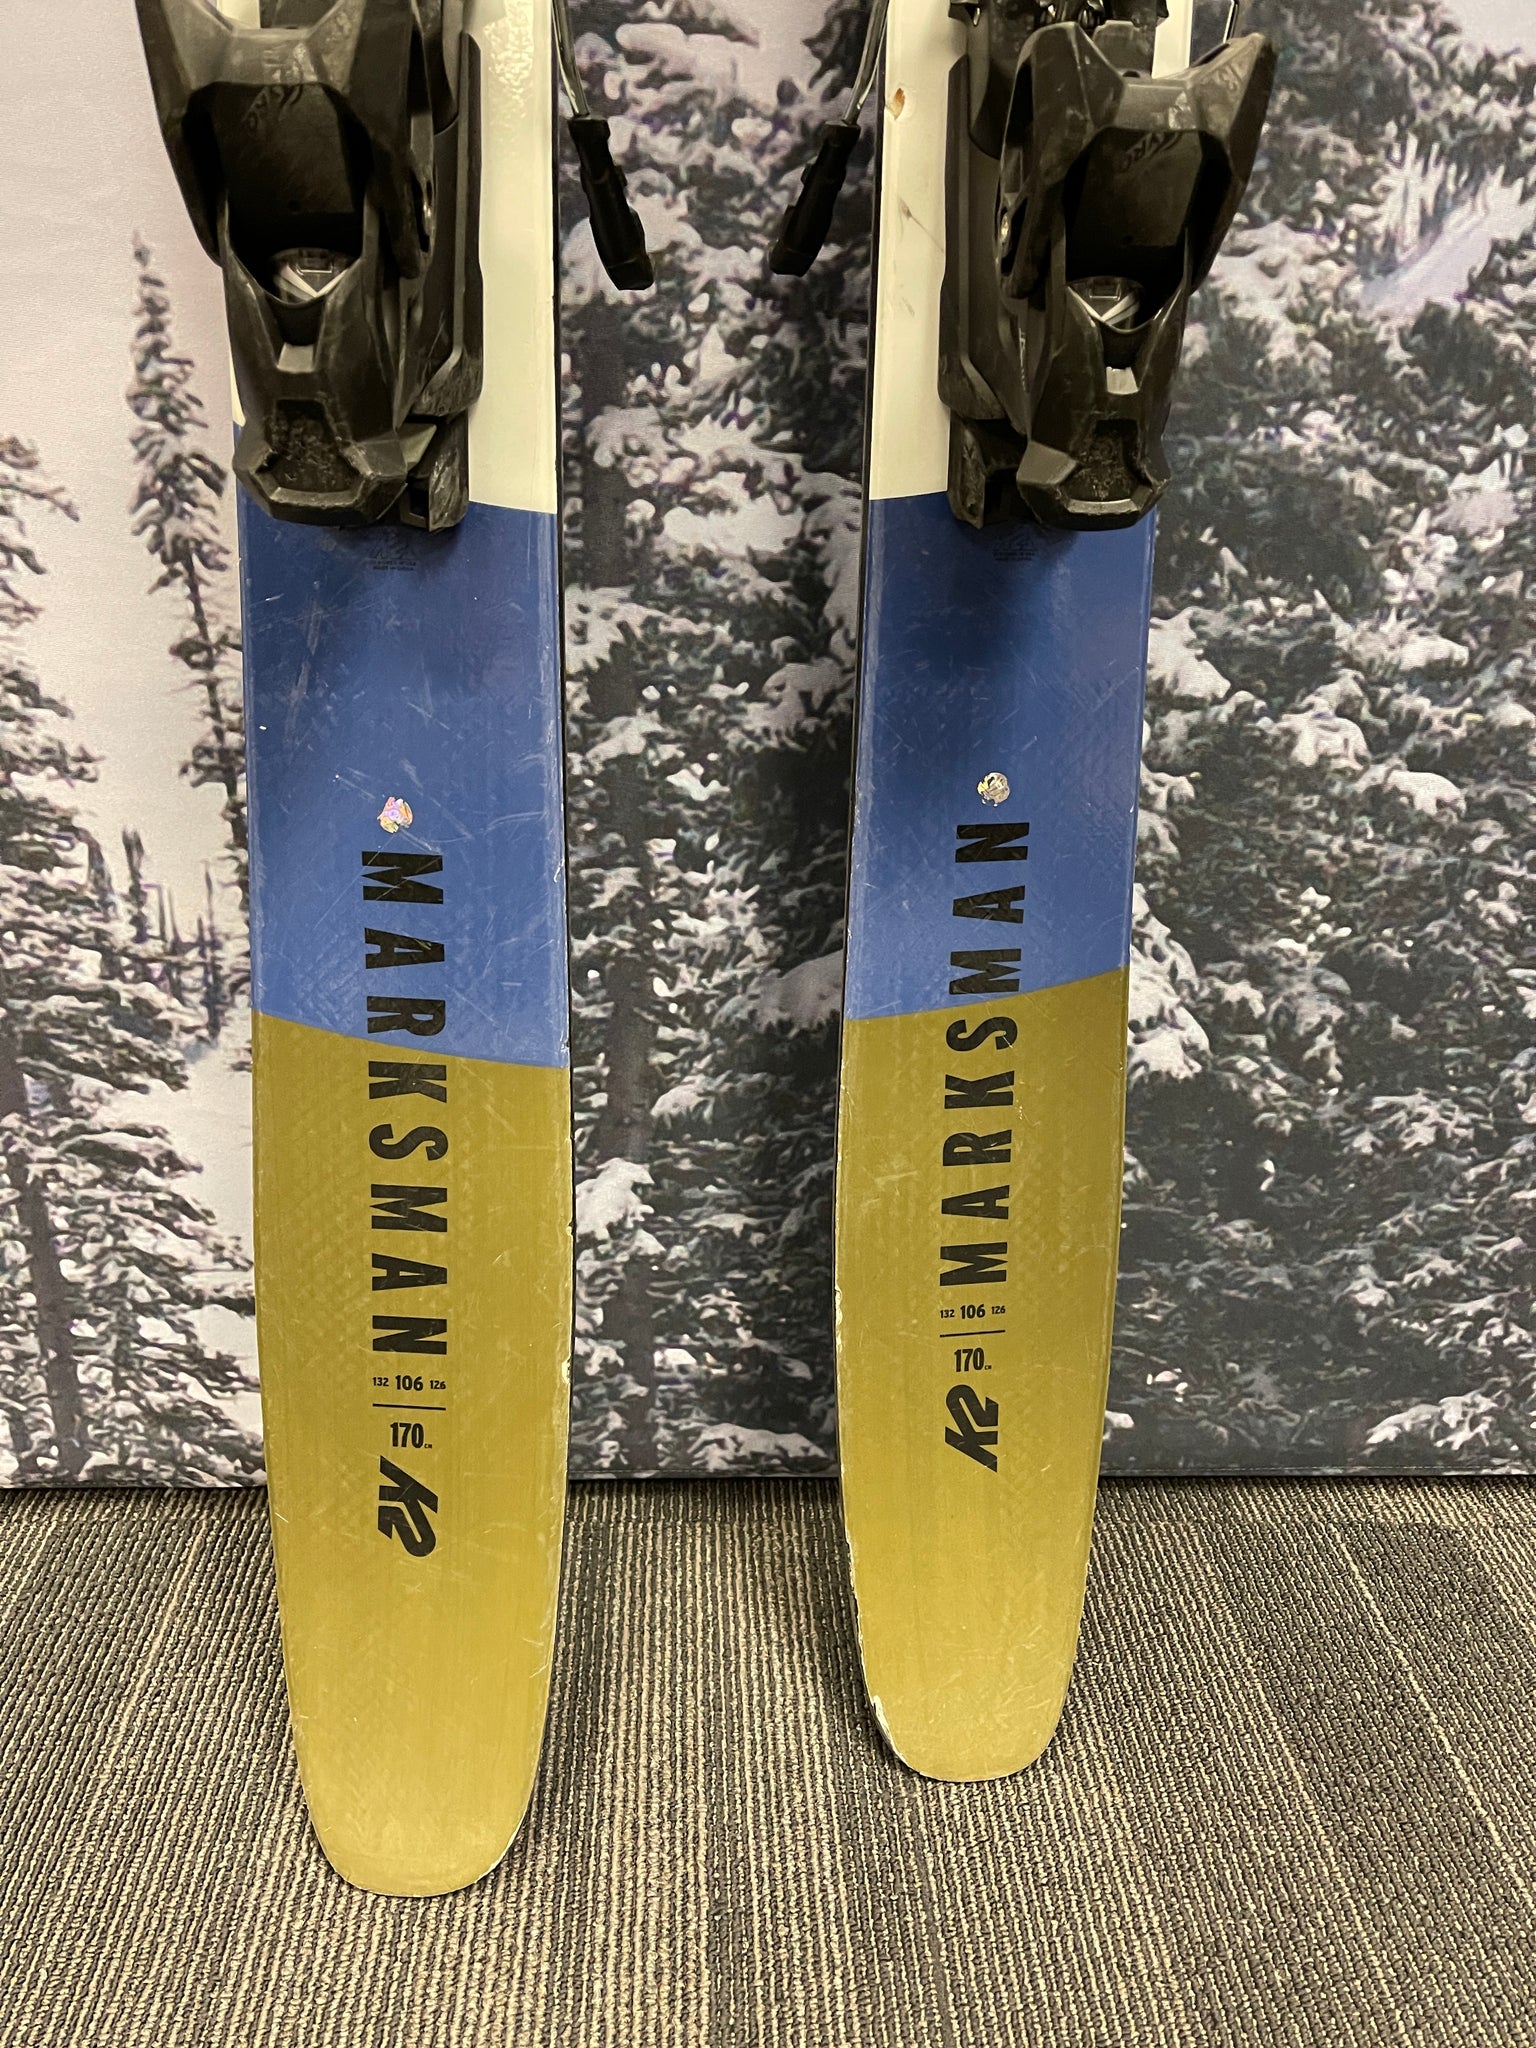 USED K2 Marksman 170cm w/ Tyrolia Attack 13 binding - 2020 Ski